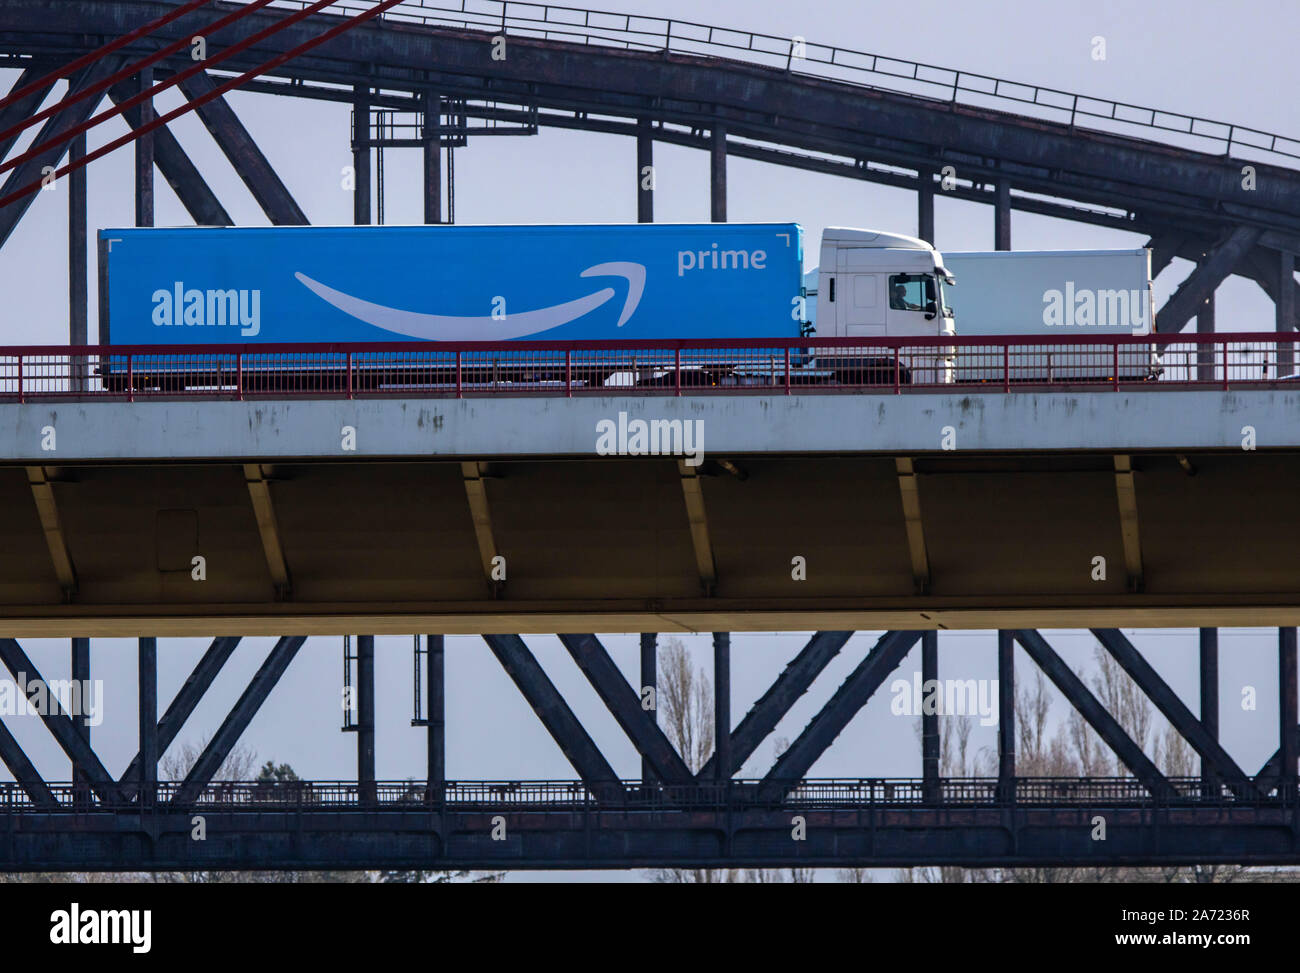 Brücke über den Rhein bei Duisburg, Autobahn A42 Brücke Eisenbahnbrücke an  der Rückseite, Amazon Prime Truck, Amazon eigene Spedition, Logistik divi  Stockfotografie - Alamy